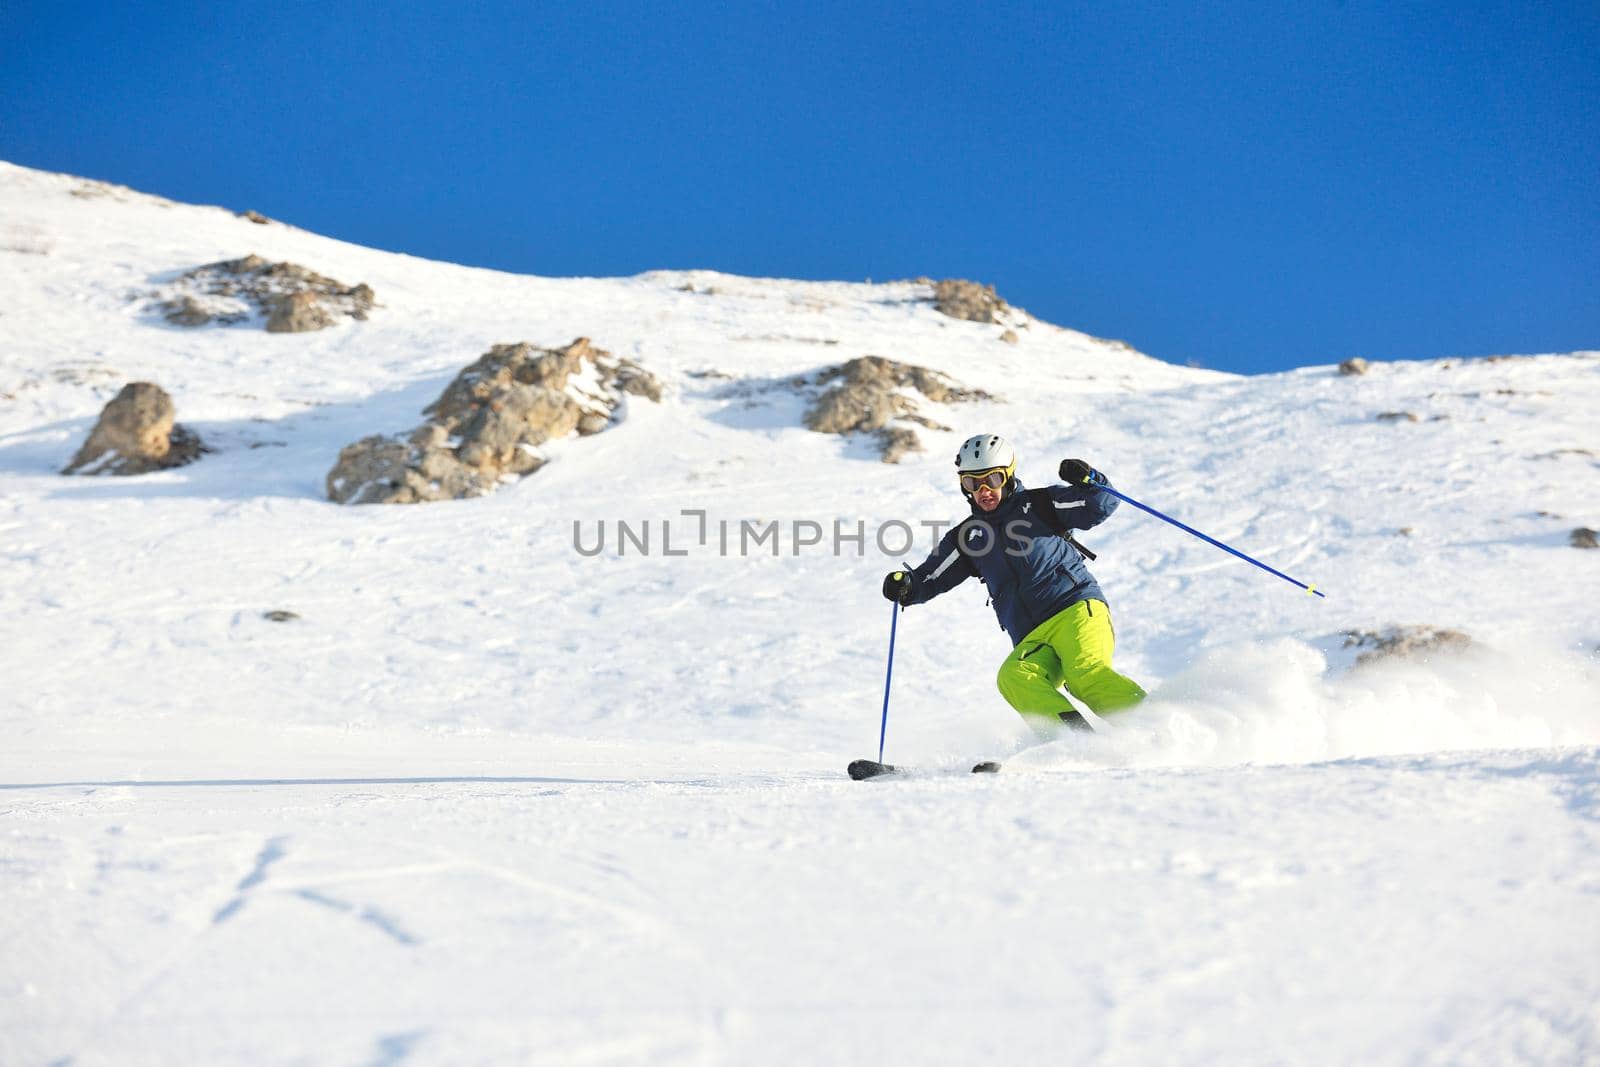 skiing on fresh snow at winter season at beautiful sunny day by dotshock